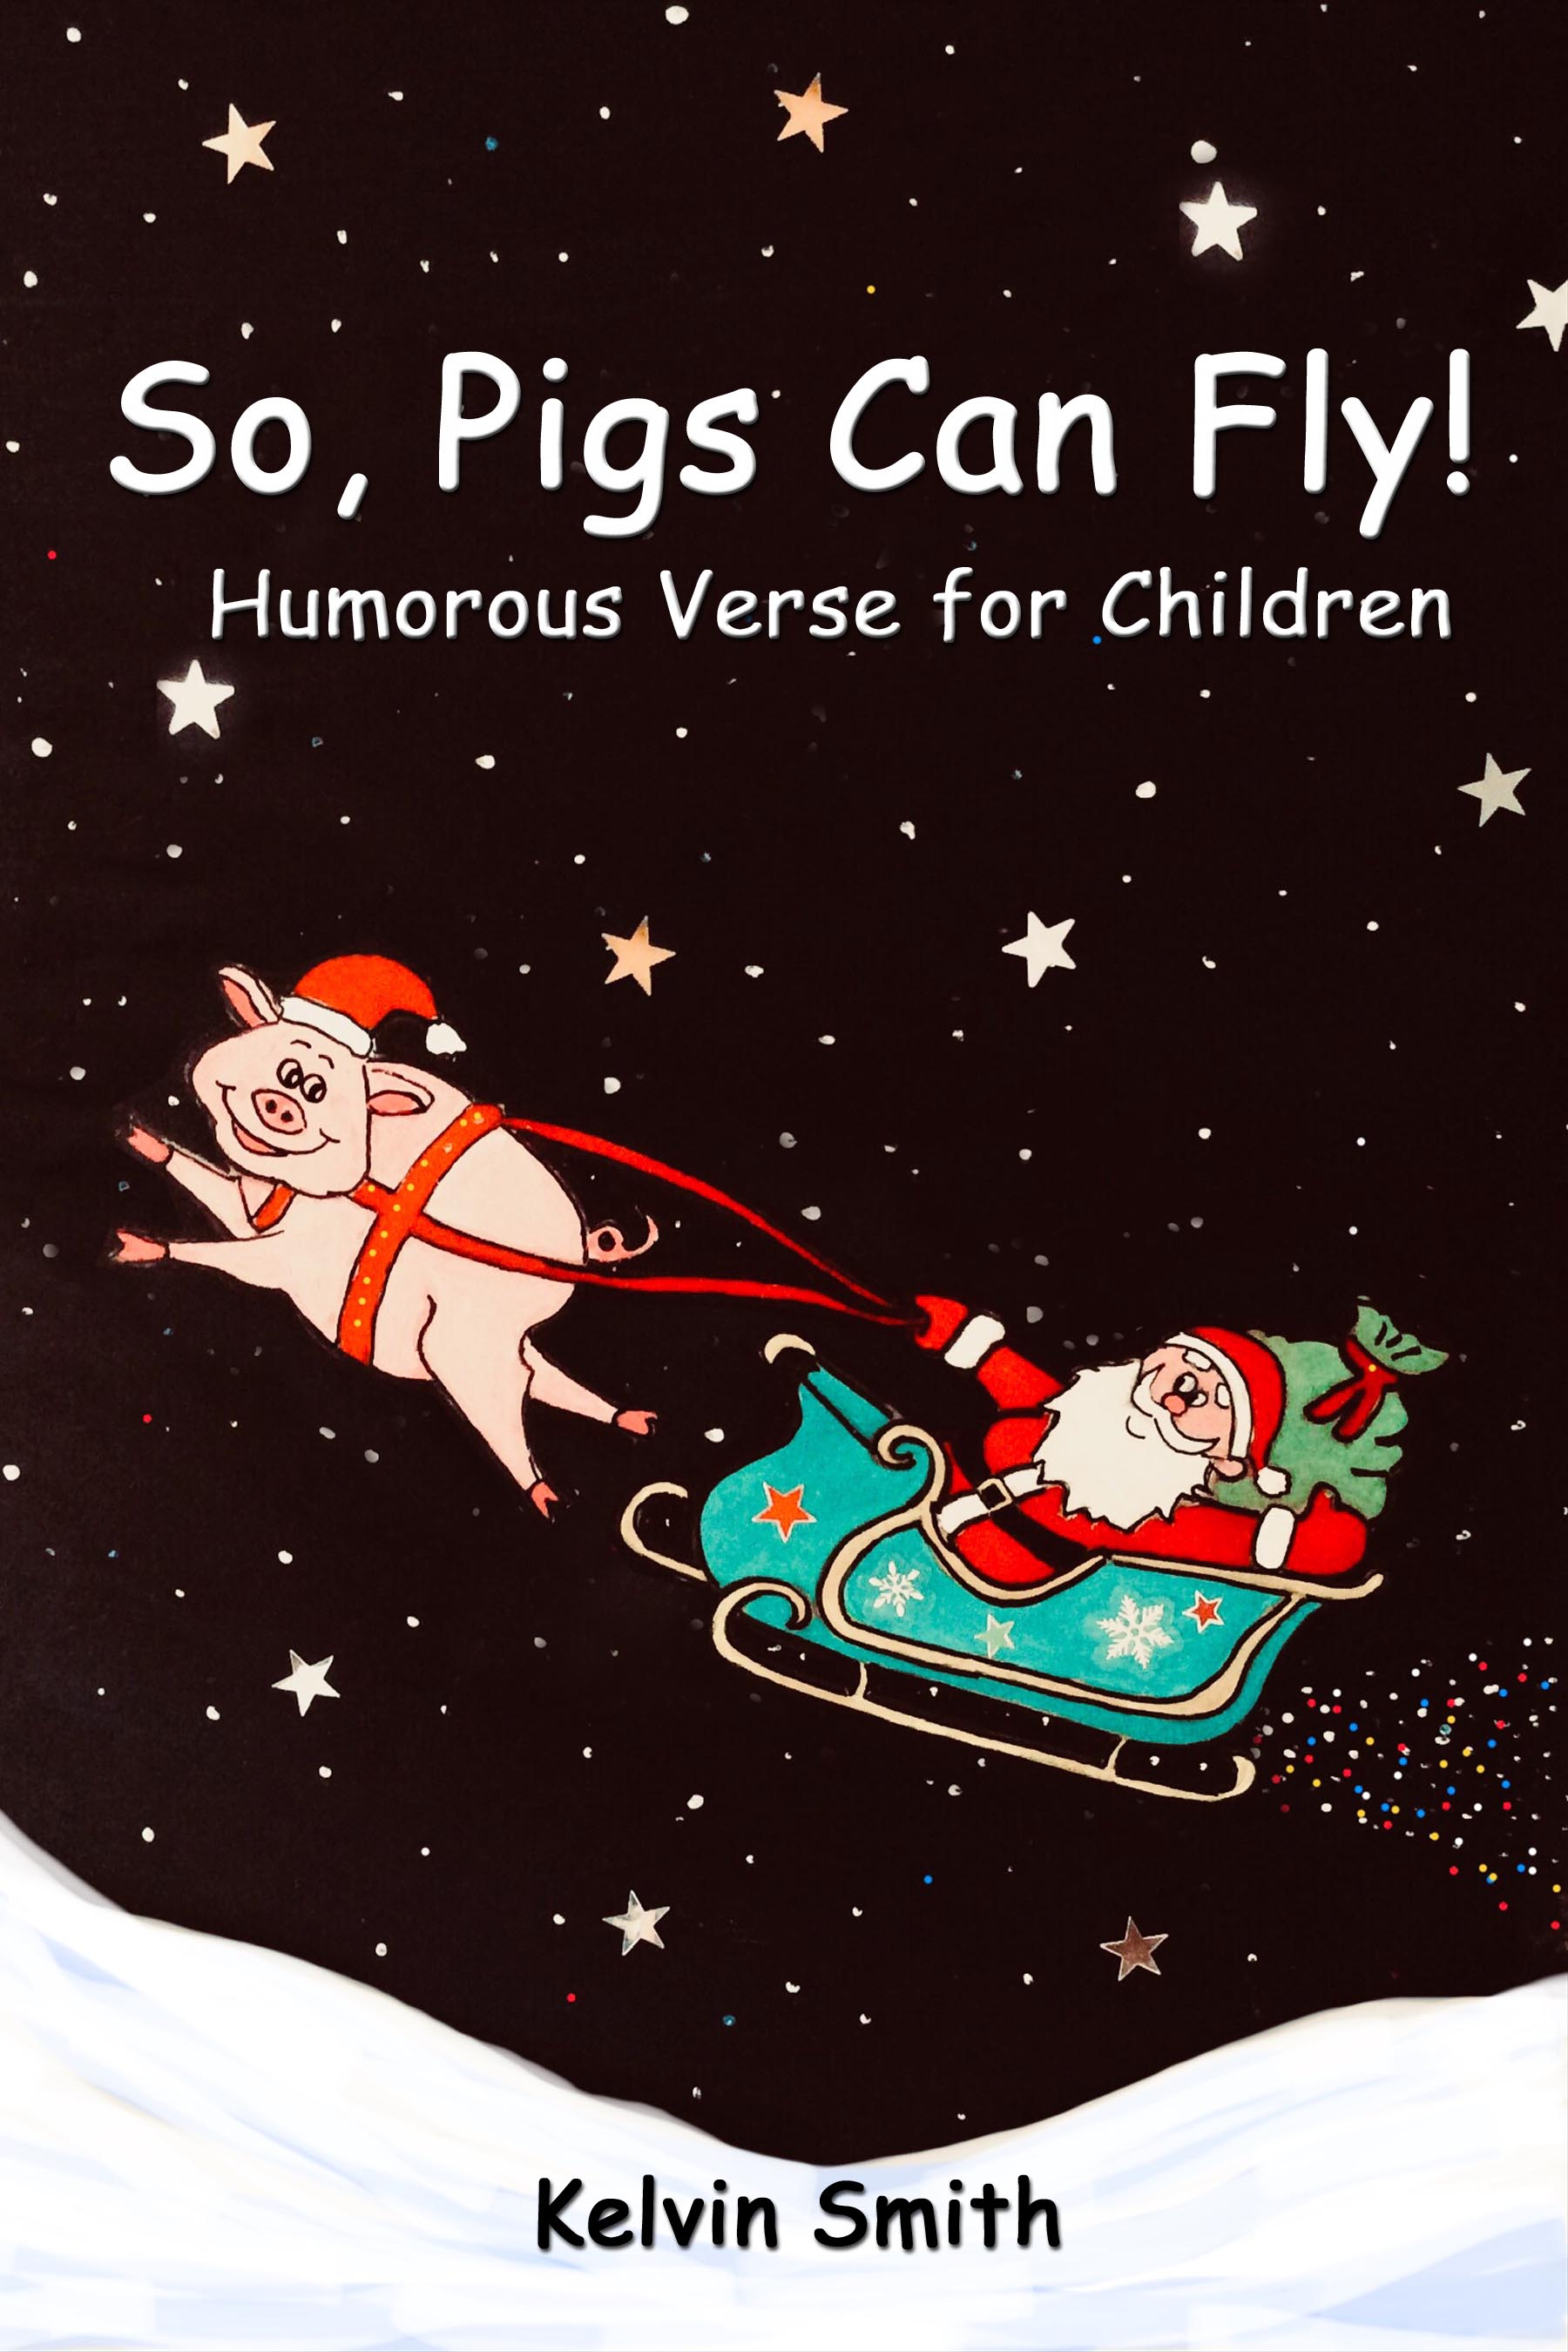 Humorous verse for children